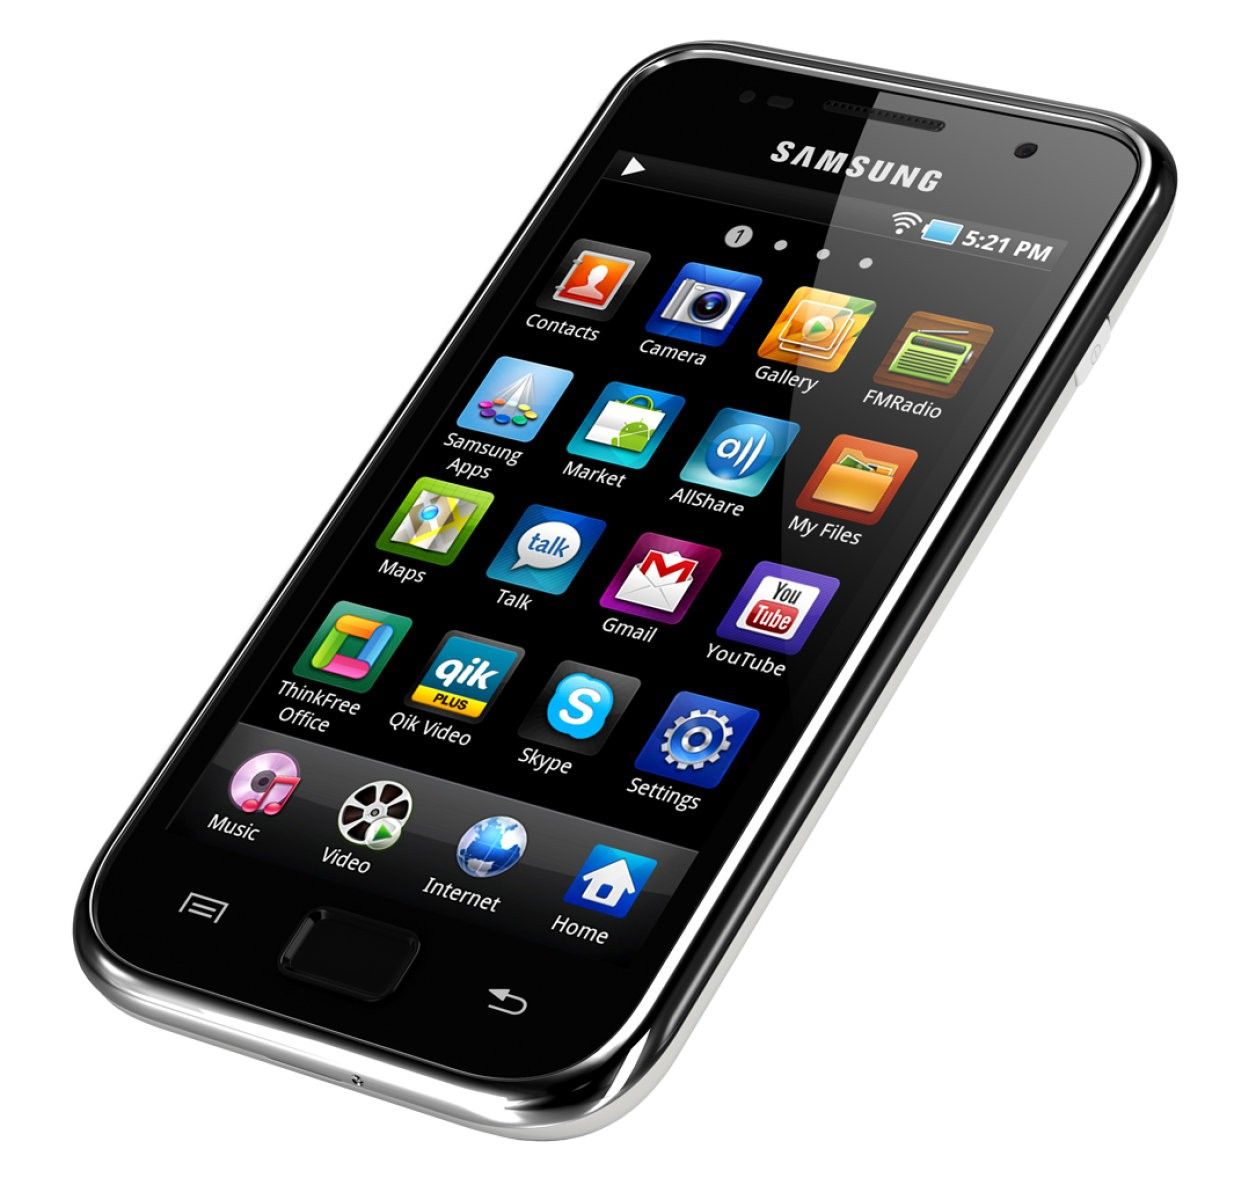 Samsung Galaxy s WIFI 5.0